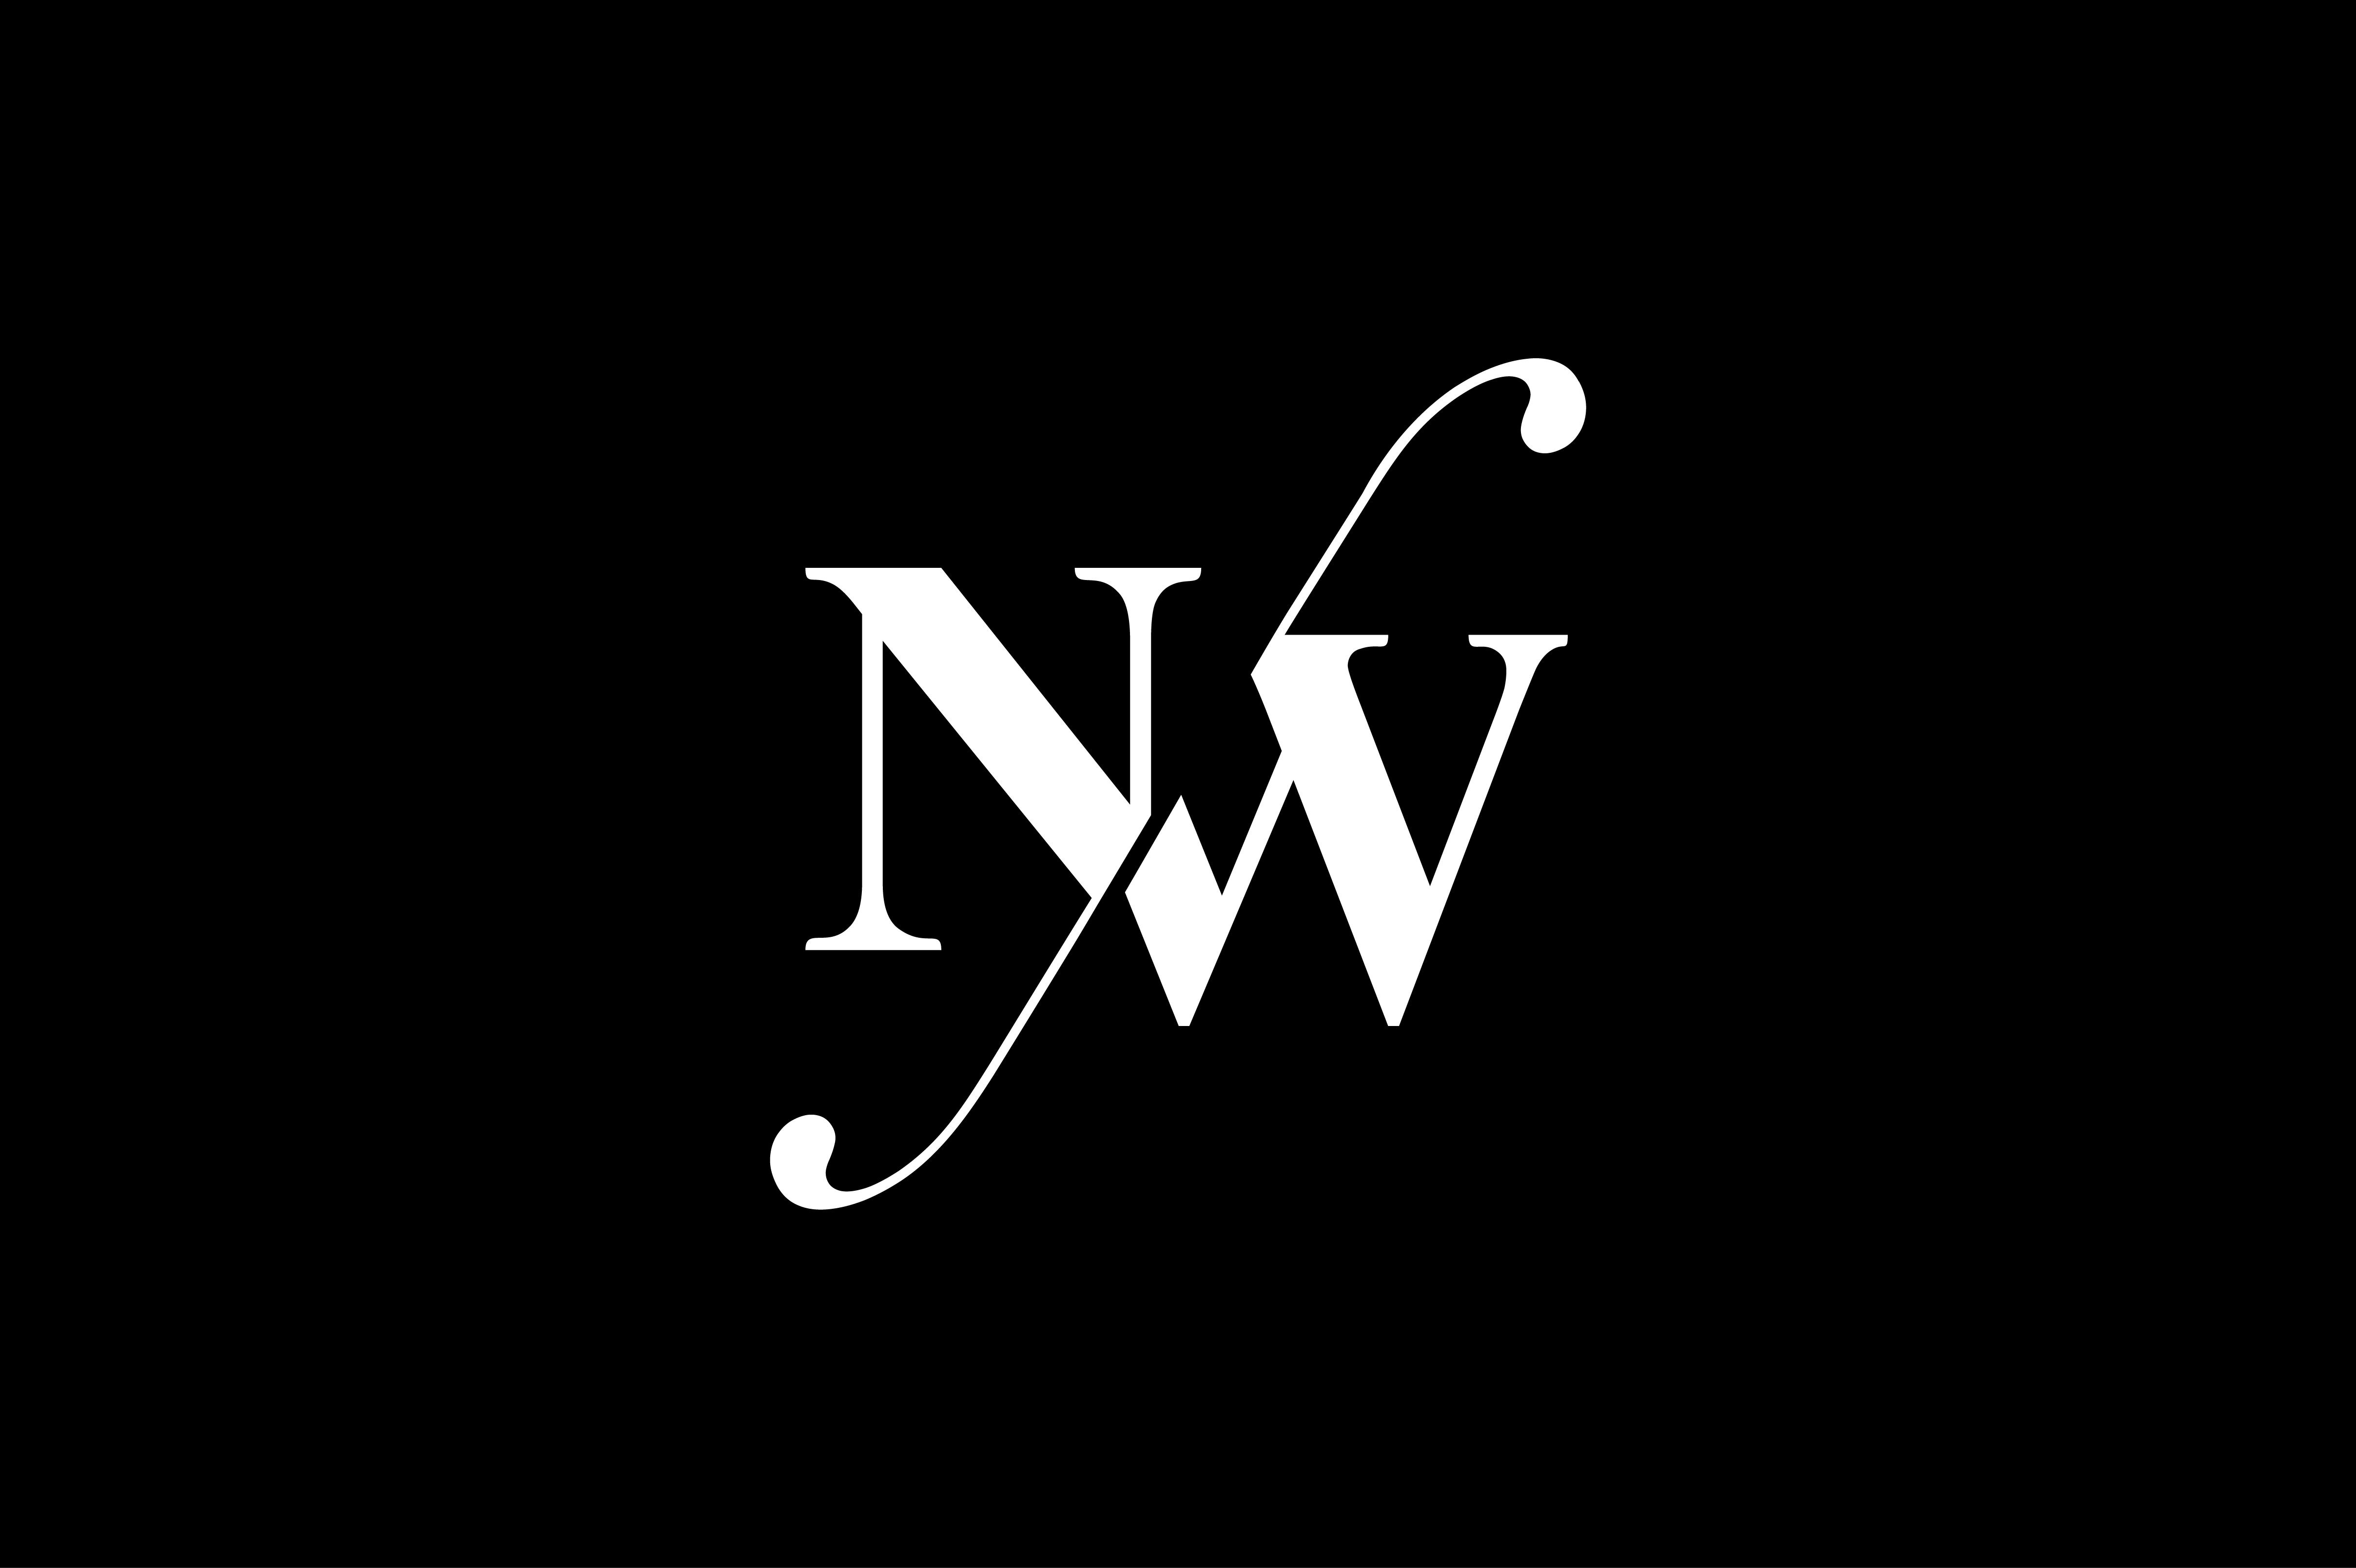 nw-monogram-logo-design-by-vectorseller-thehungryjpeg